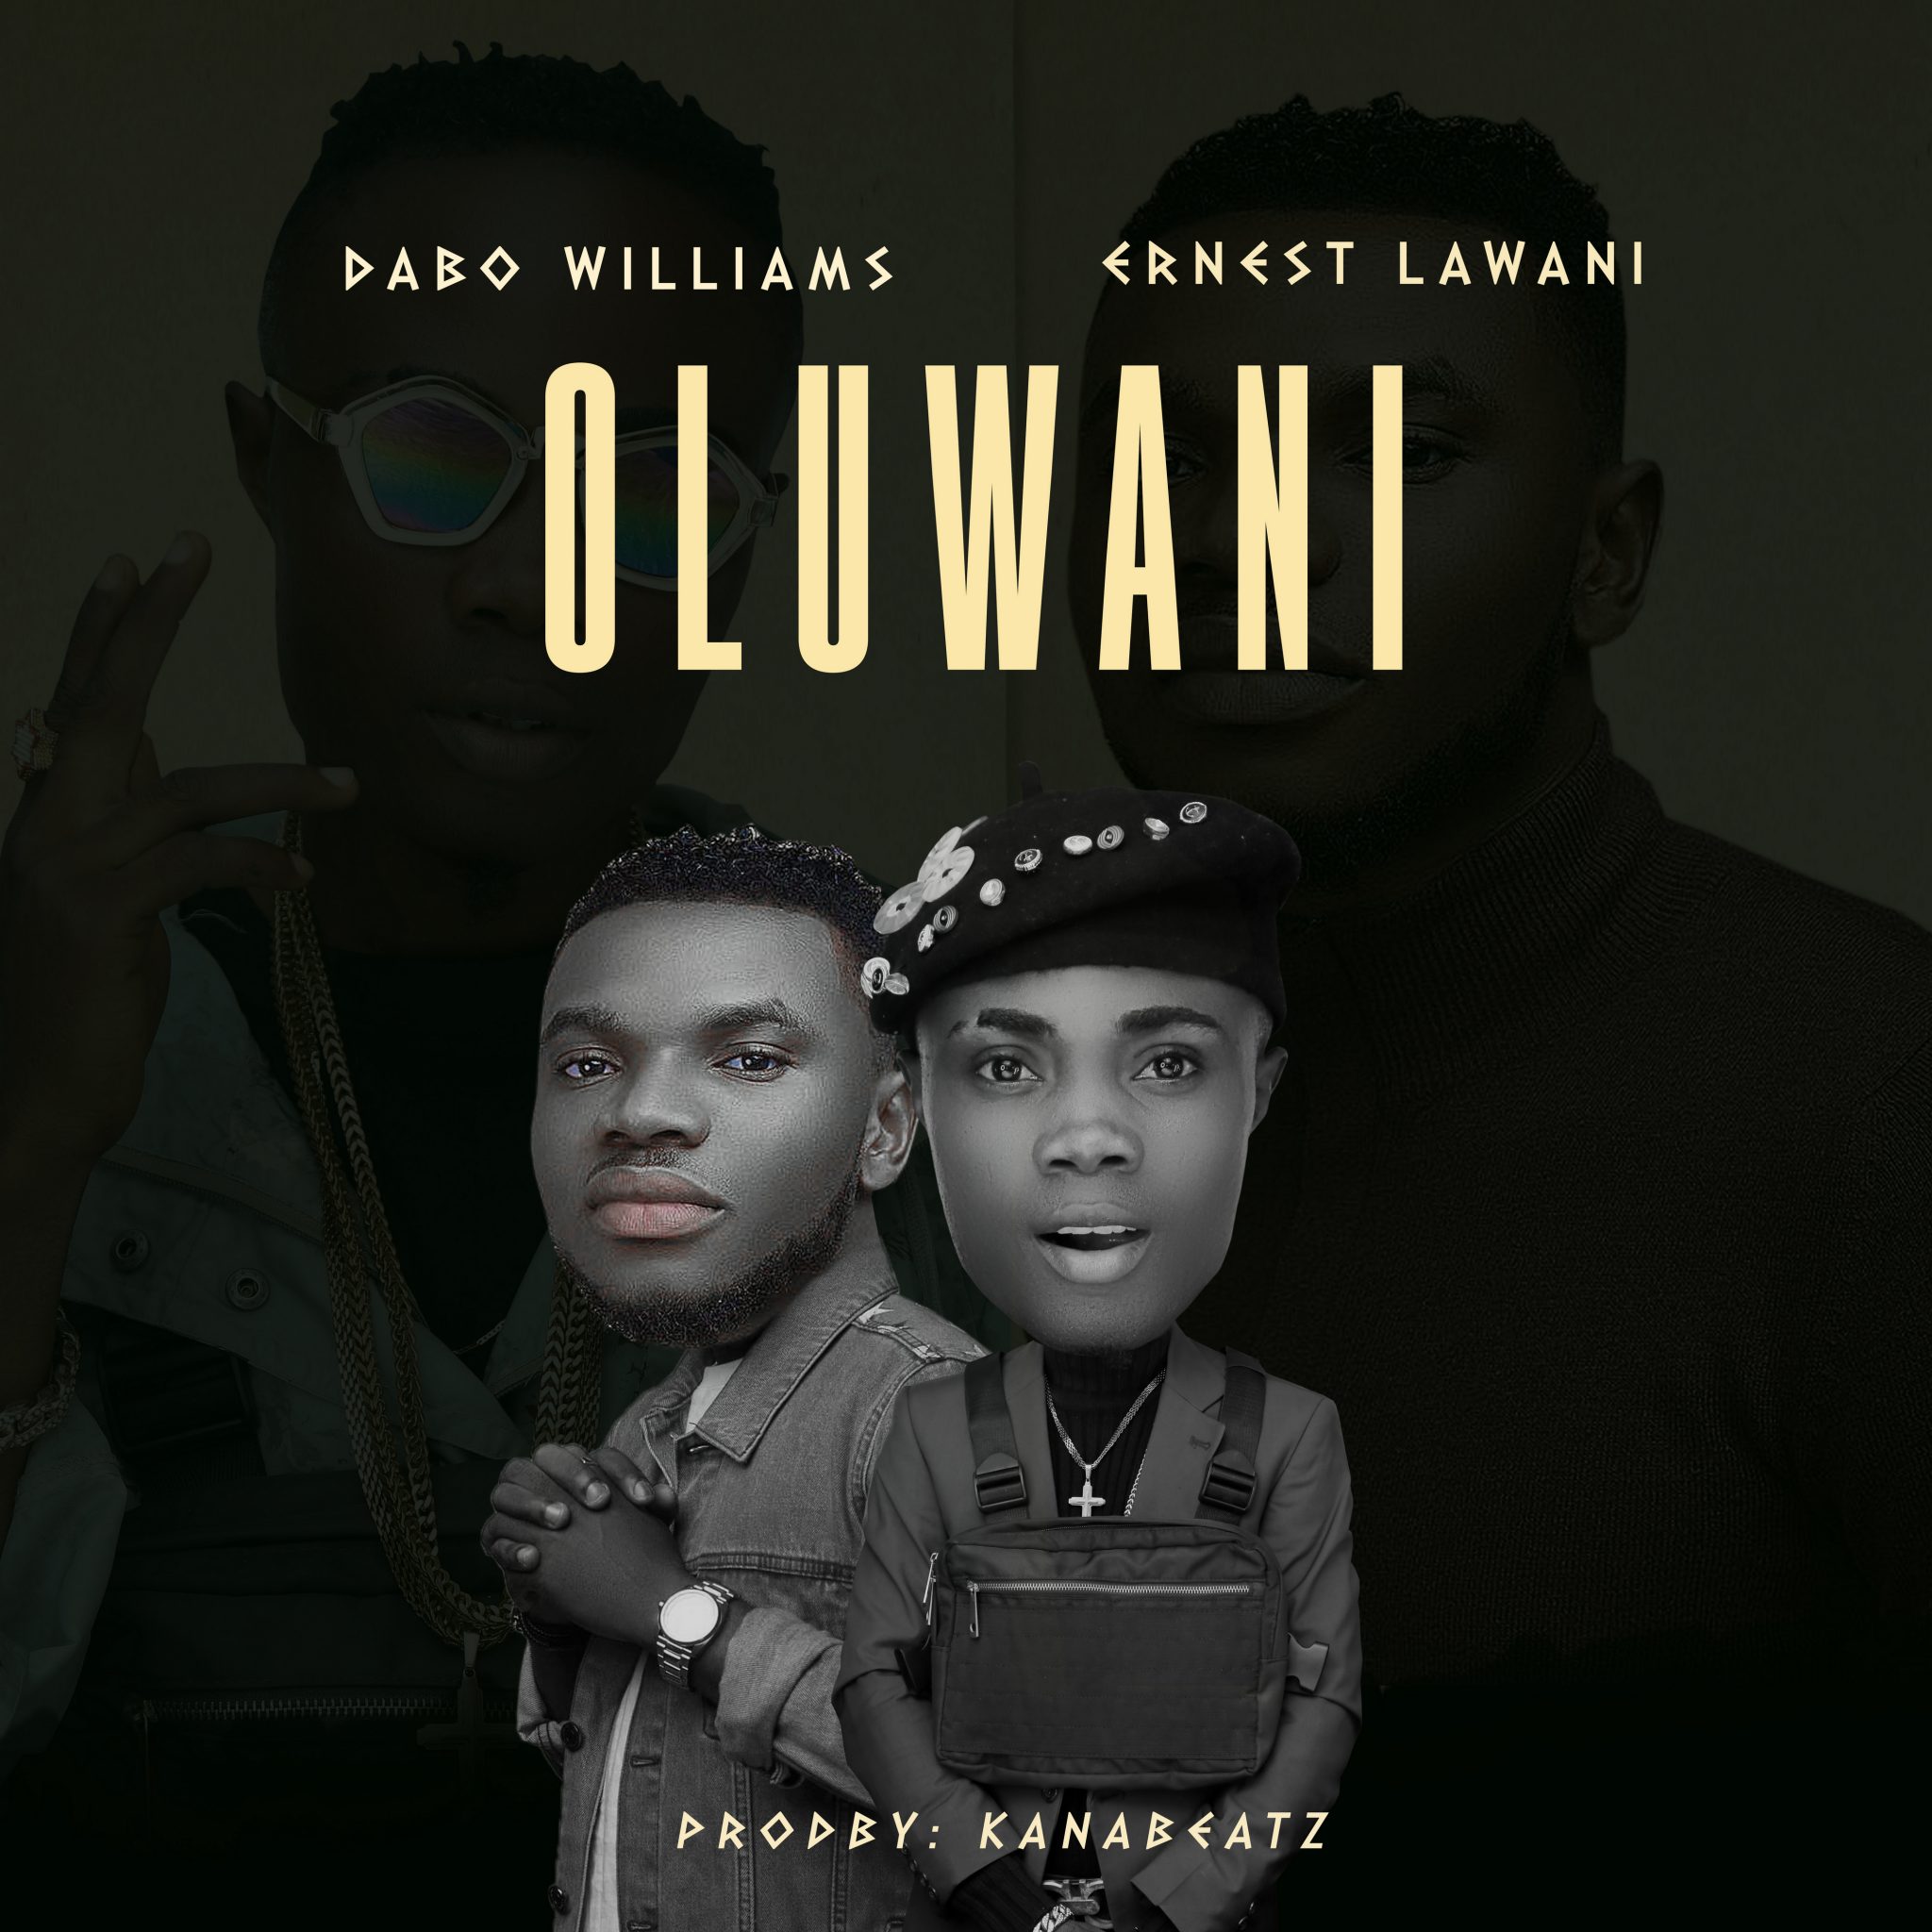 Dabo Williams Ft Ernest Lawani - Oluwani